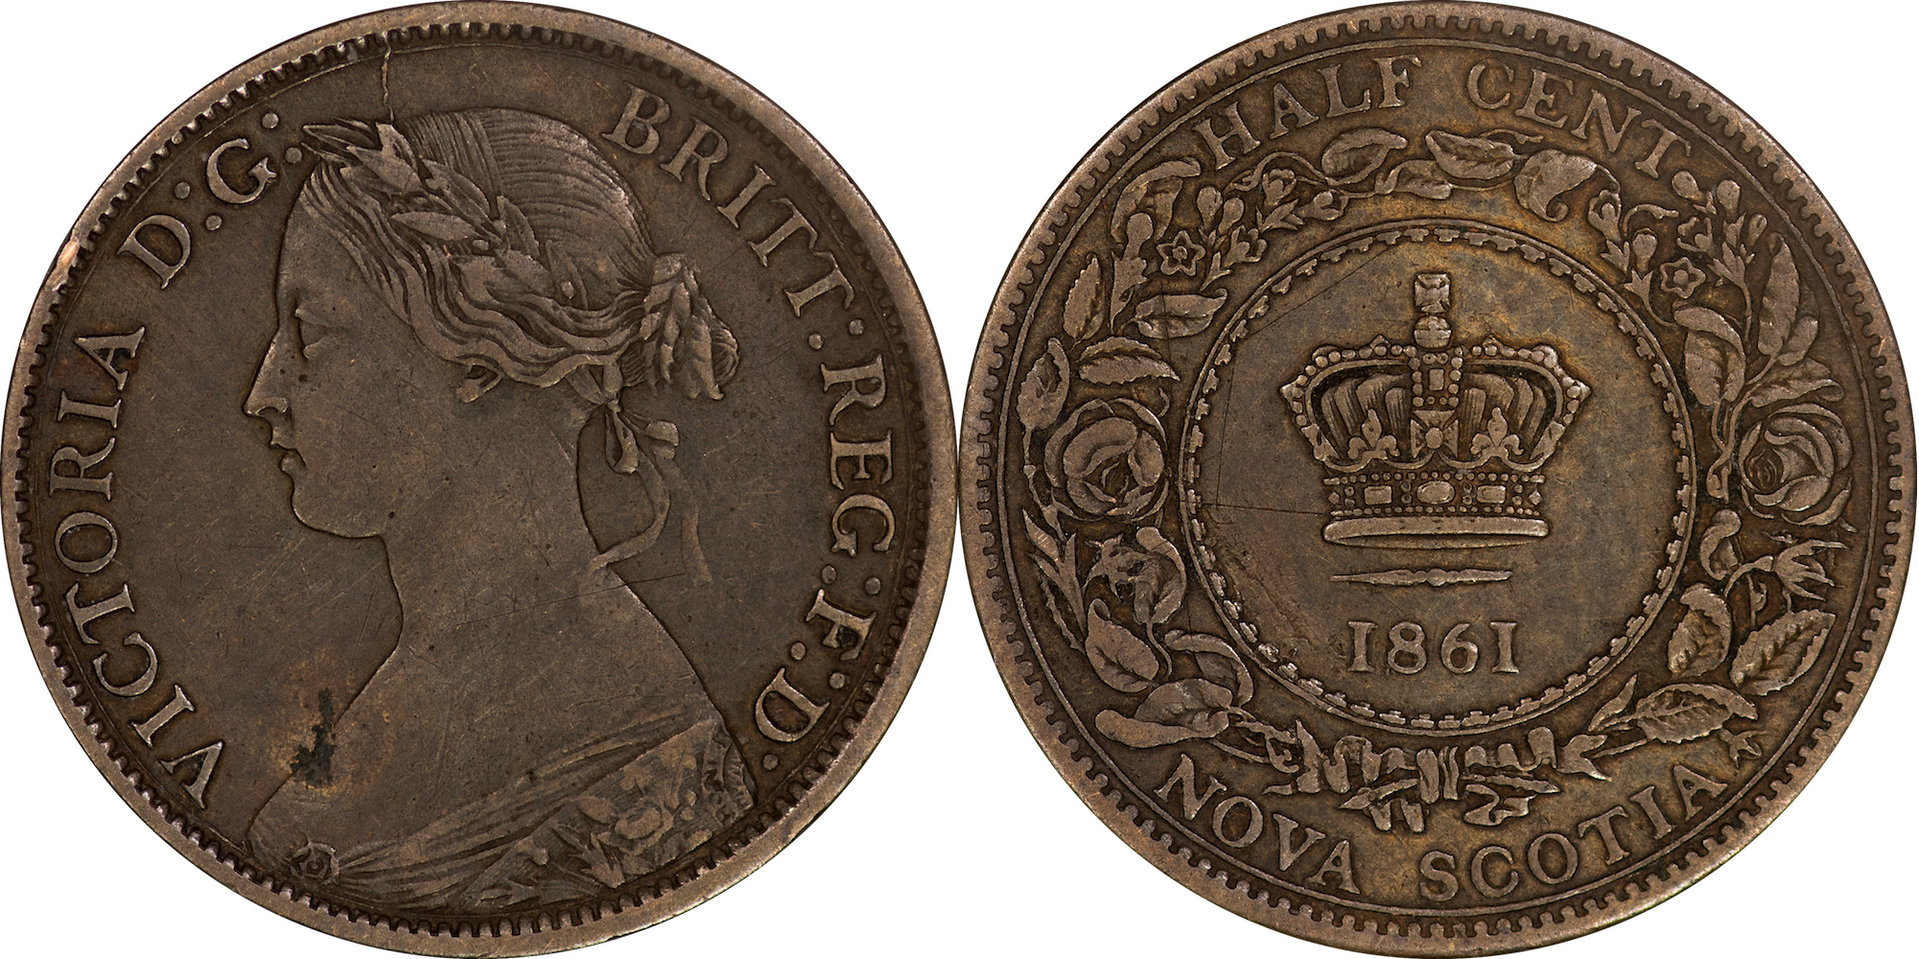 Canada (Nova Scotia) - 1861 Half Cent.jpg